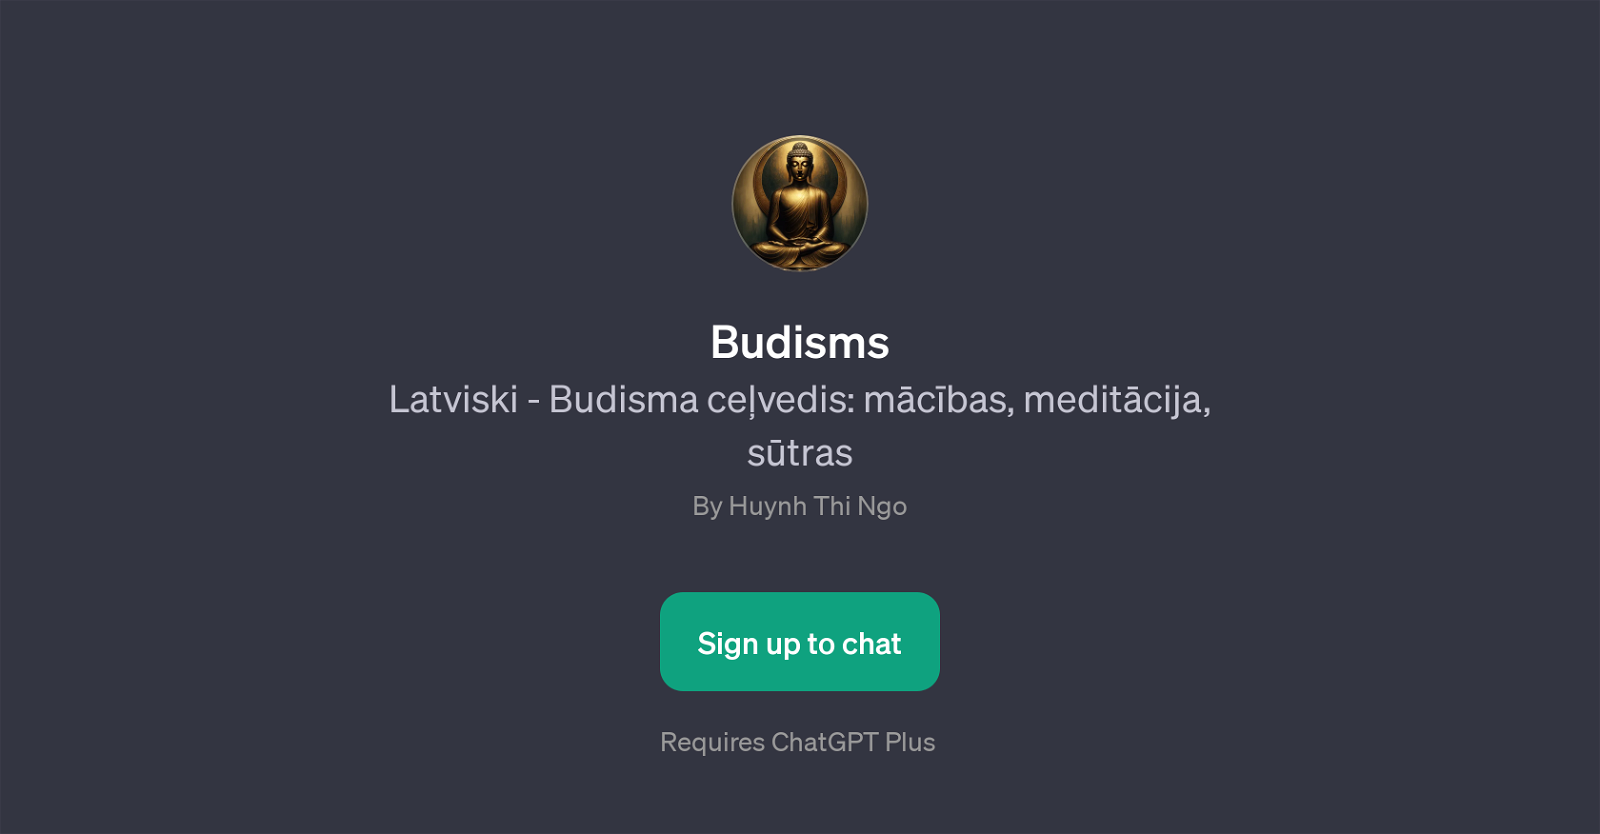 Budisms website